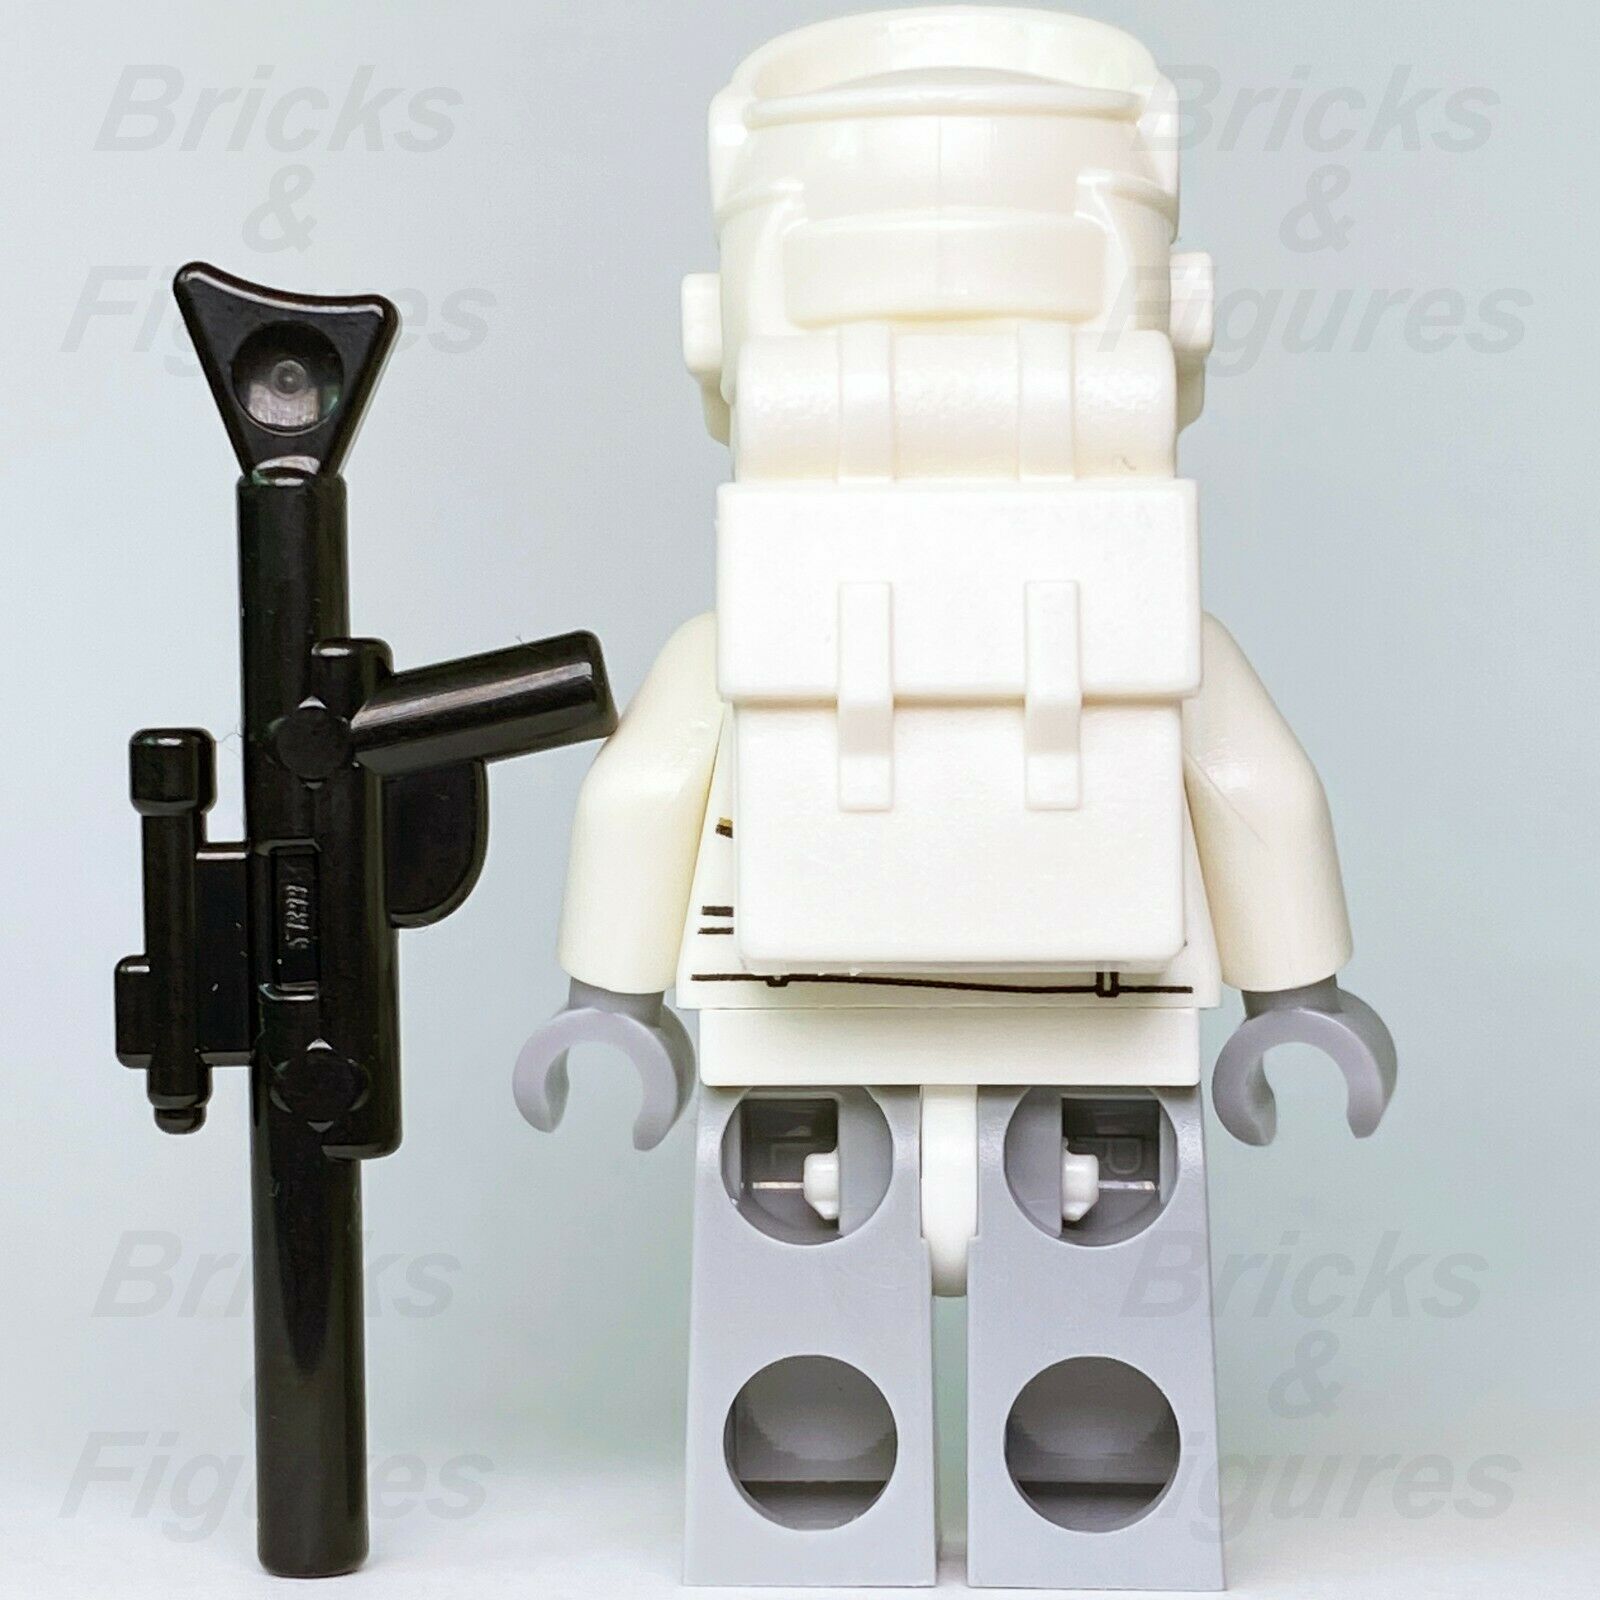 New Star Wars LEGO Hoth Rebel Trooper with Cheek Lines Minifigure 75098 75097 - Bricks & Figures